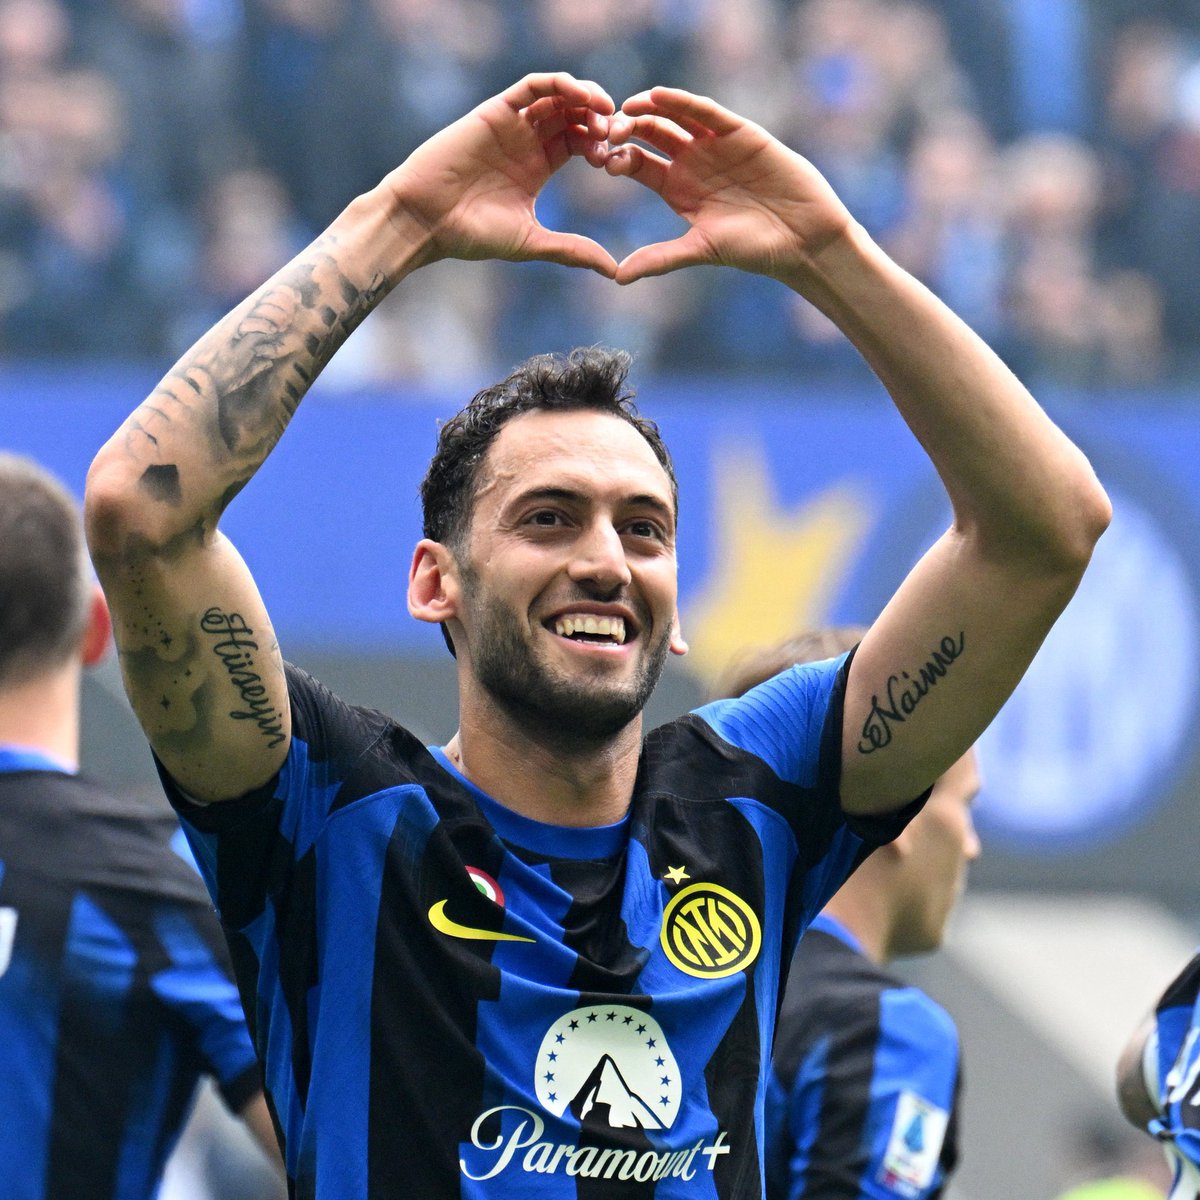 FT | #SerieA
Inter Milan 2-0 Torino

⚽️⚽️ Hakan Calhanoglu 56’, 60’ (P)
-
🔴 Tameze 49’

Brace Calhanoglu menangkan Inter Milan di kandang!✨🔥